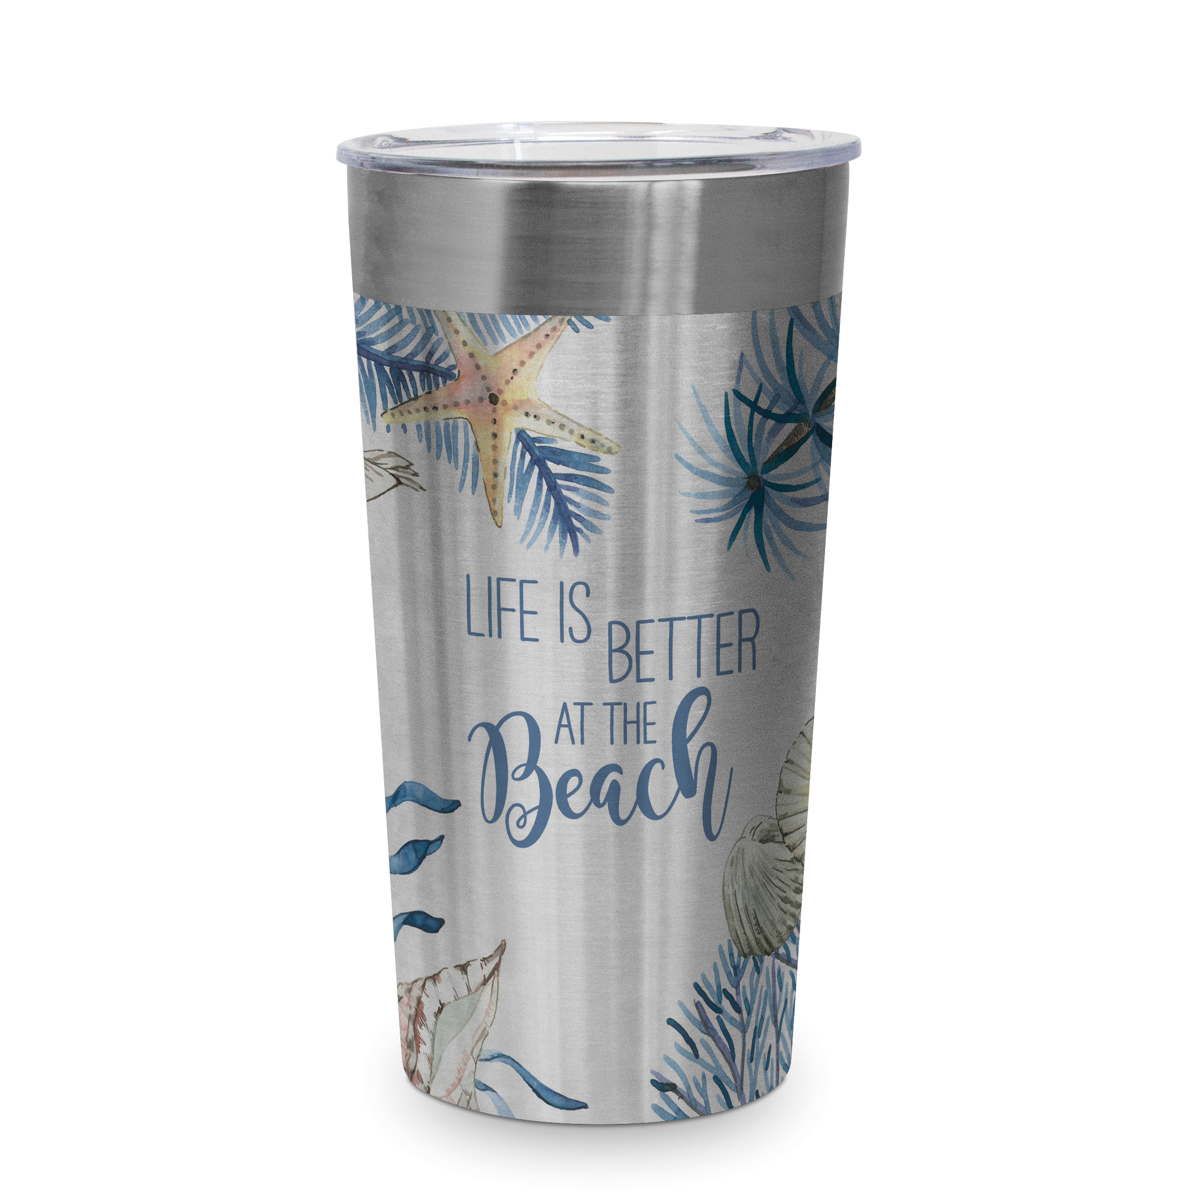 Ocean Life is better Steel Travel Mug